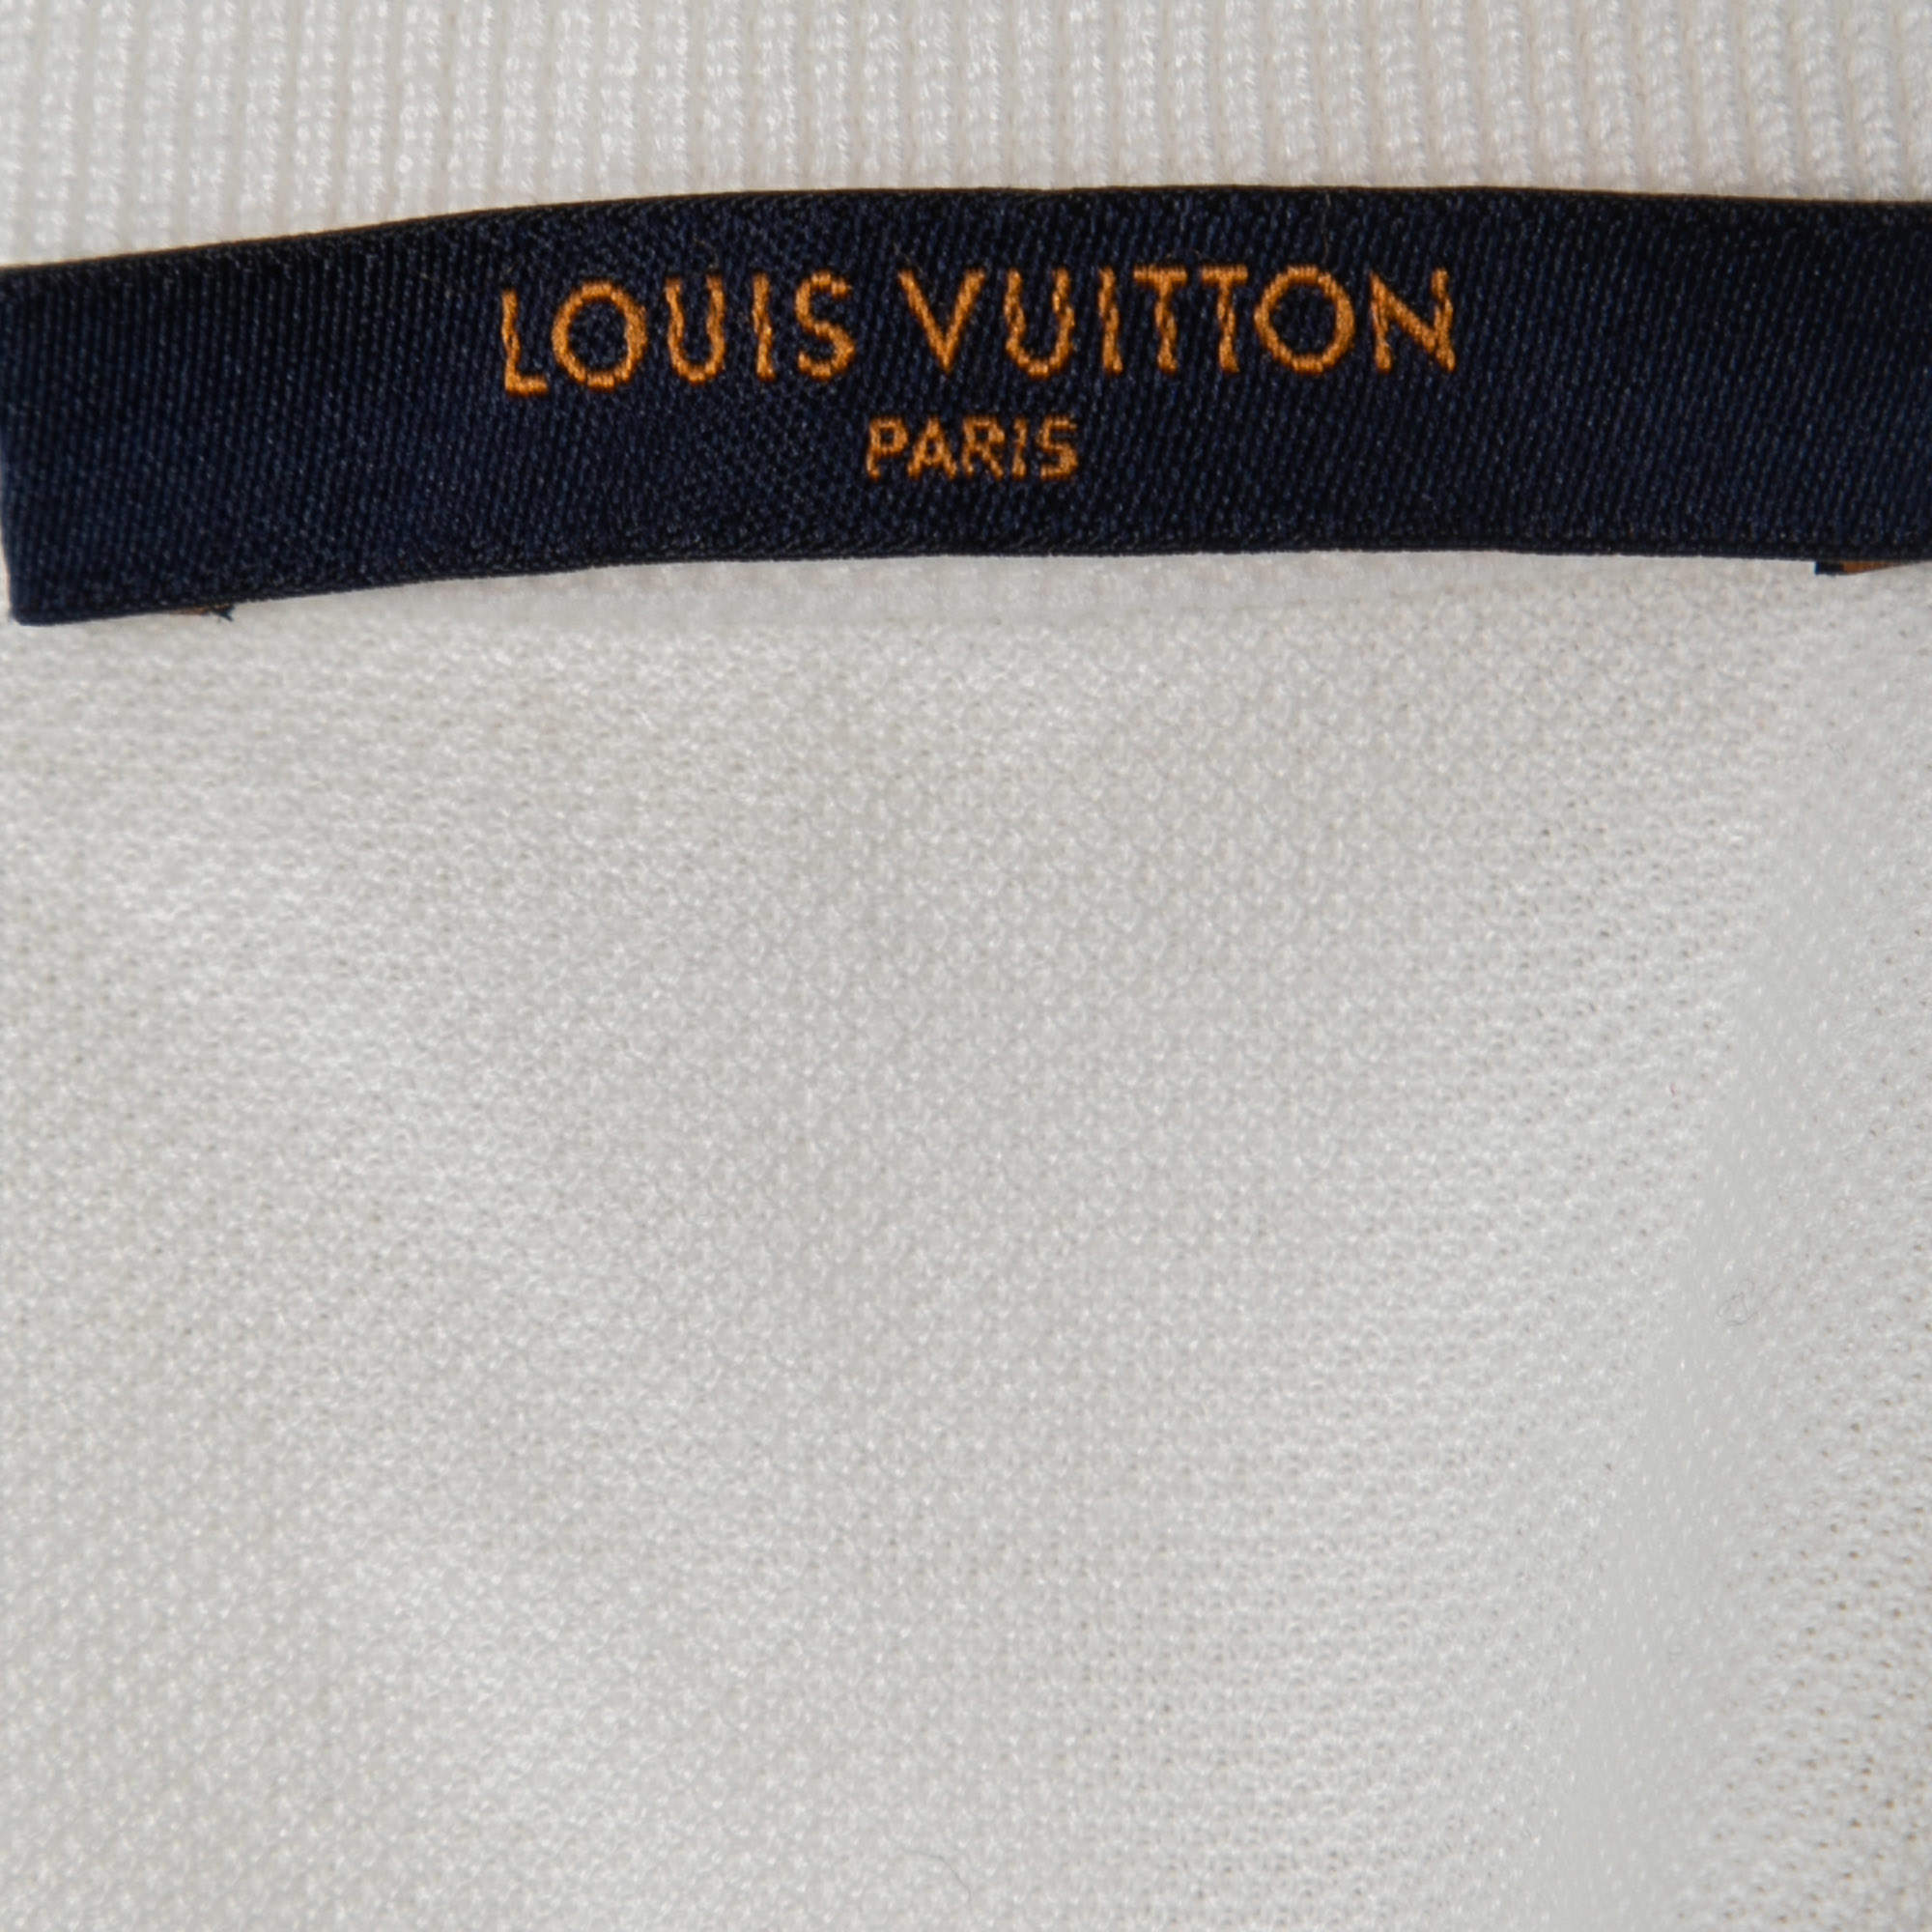 Louis Vuitton® Embroidered Cotton Pique Polo Optical White. Size